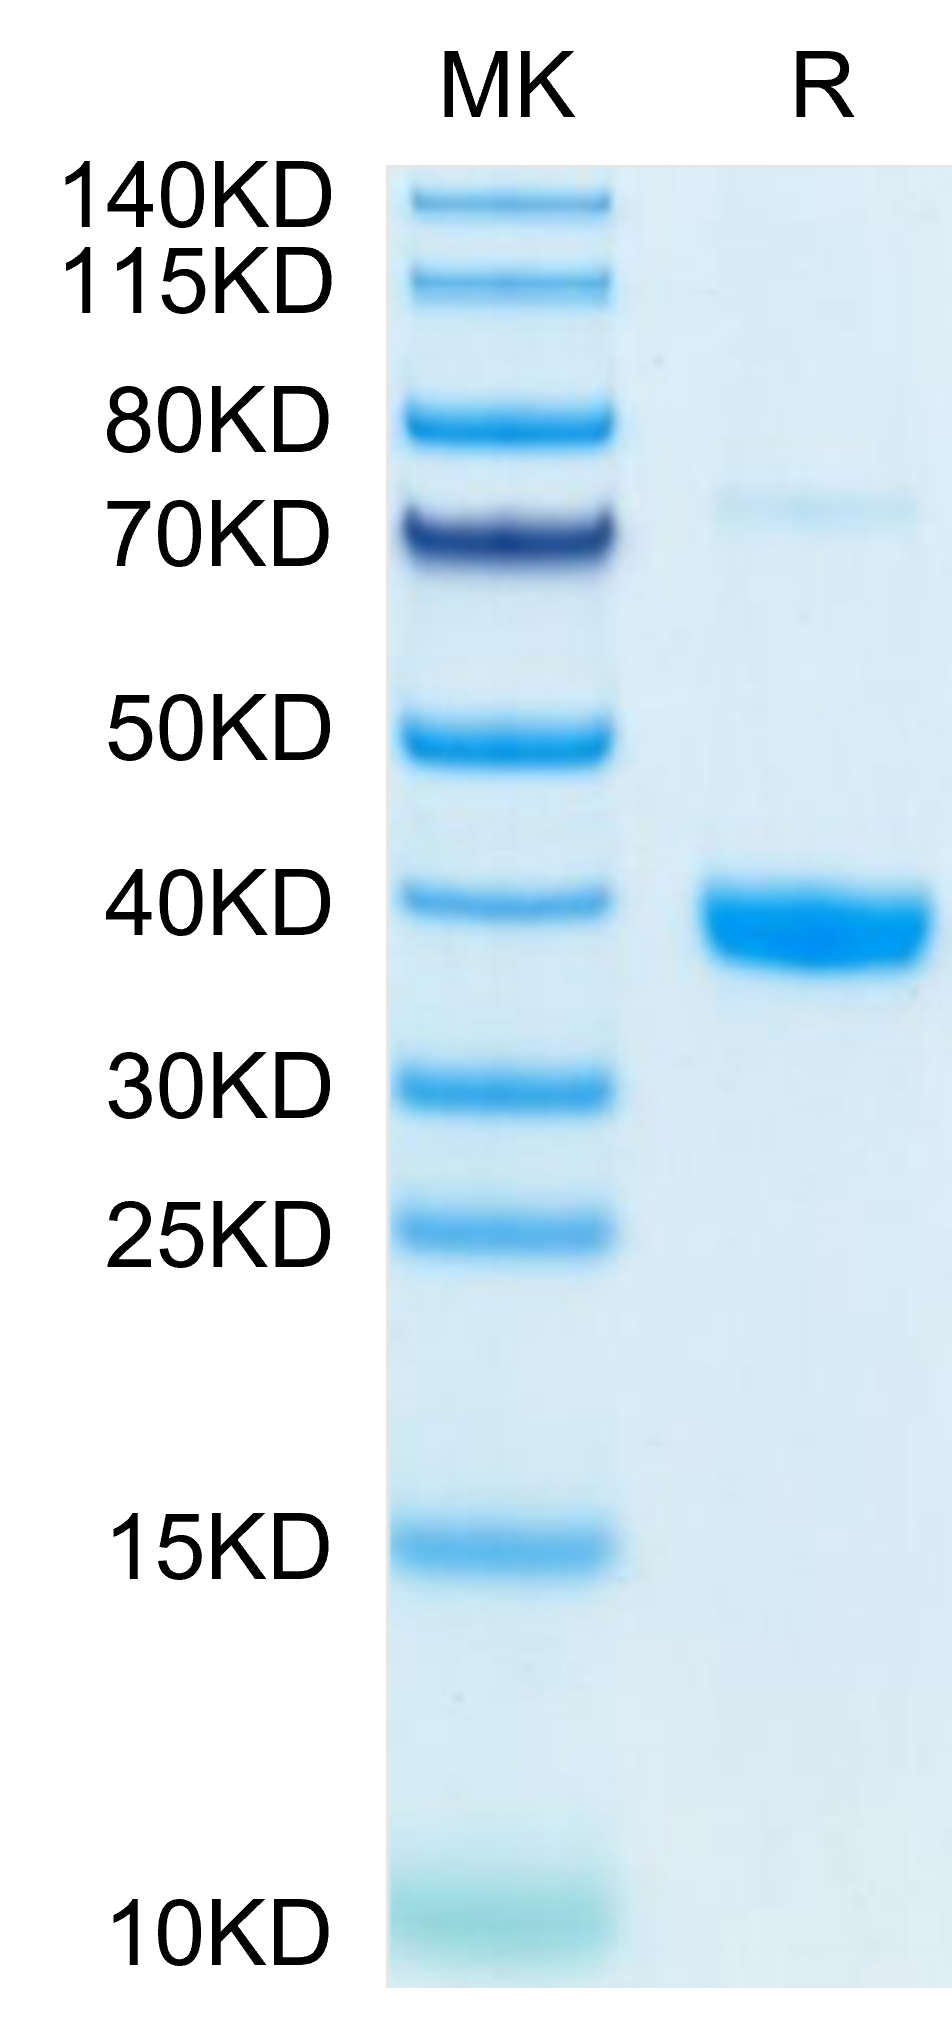 Mouse MFAP4 Protein (LTP10479)